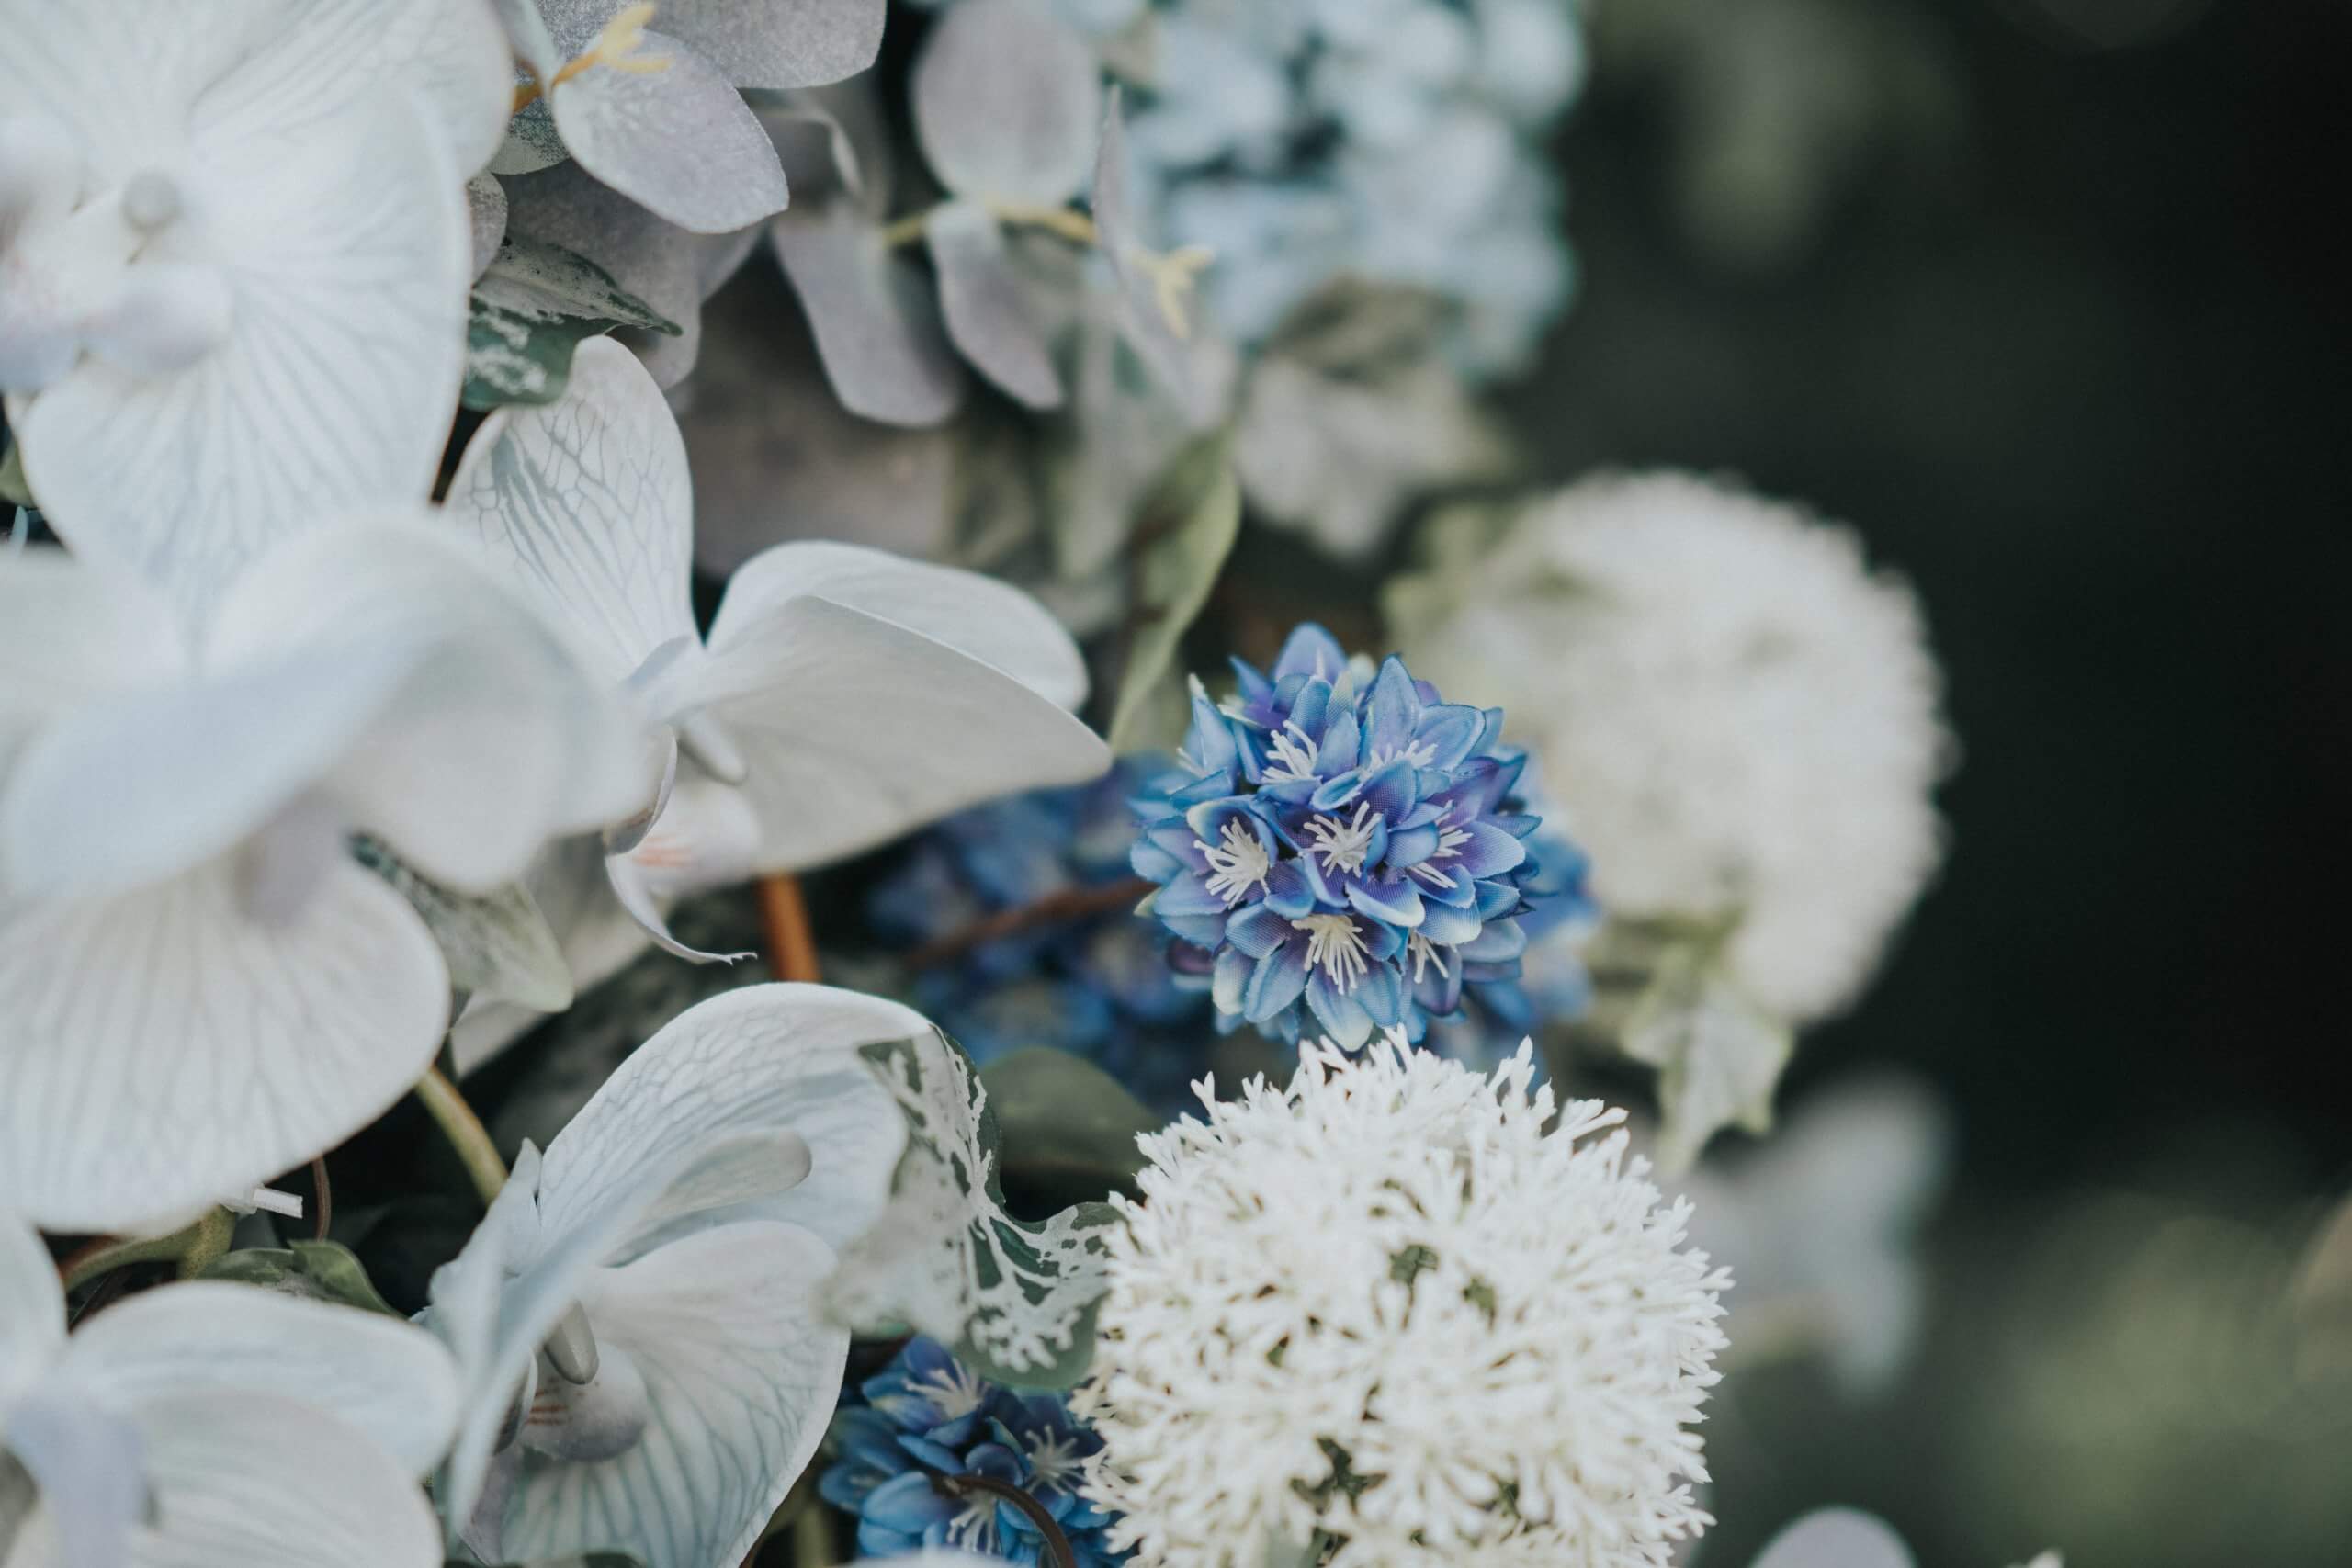 Something Blue Silk Floral Arrangement - Weddings Of Distinction